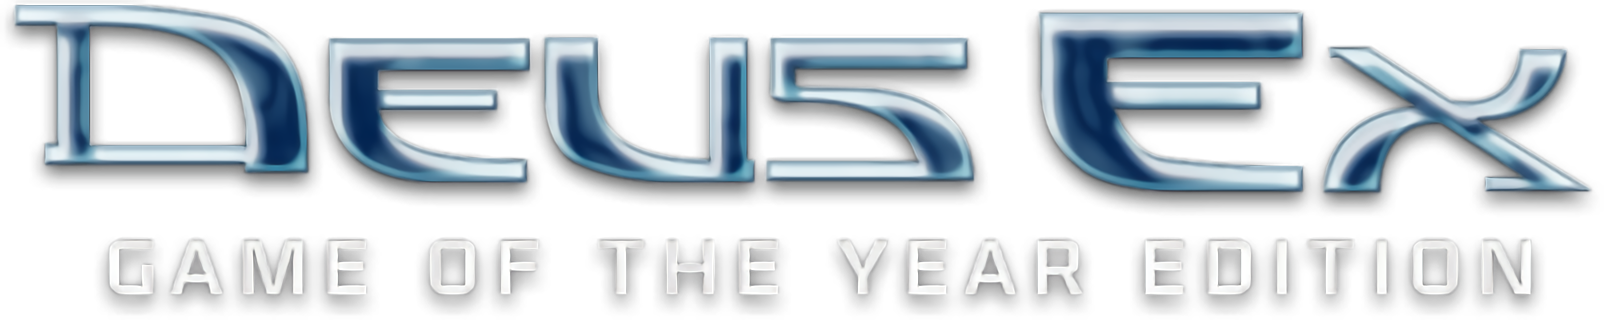 Deus Ex Logo PNG Photo Image